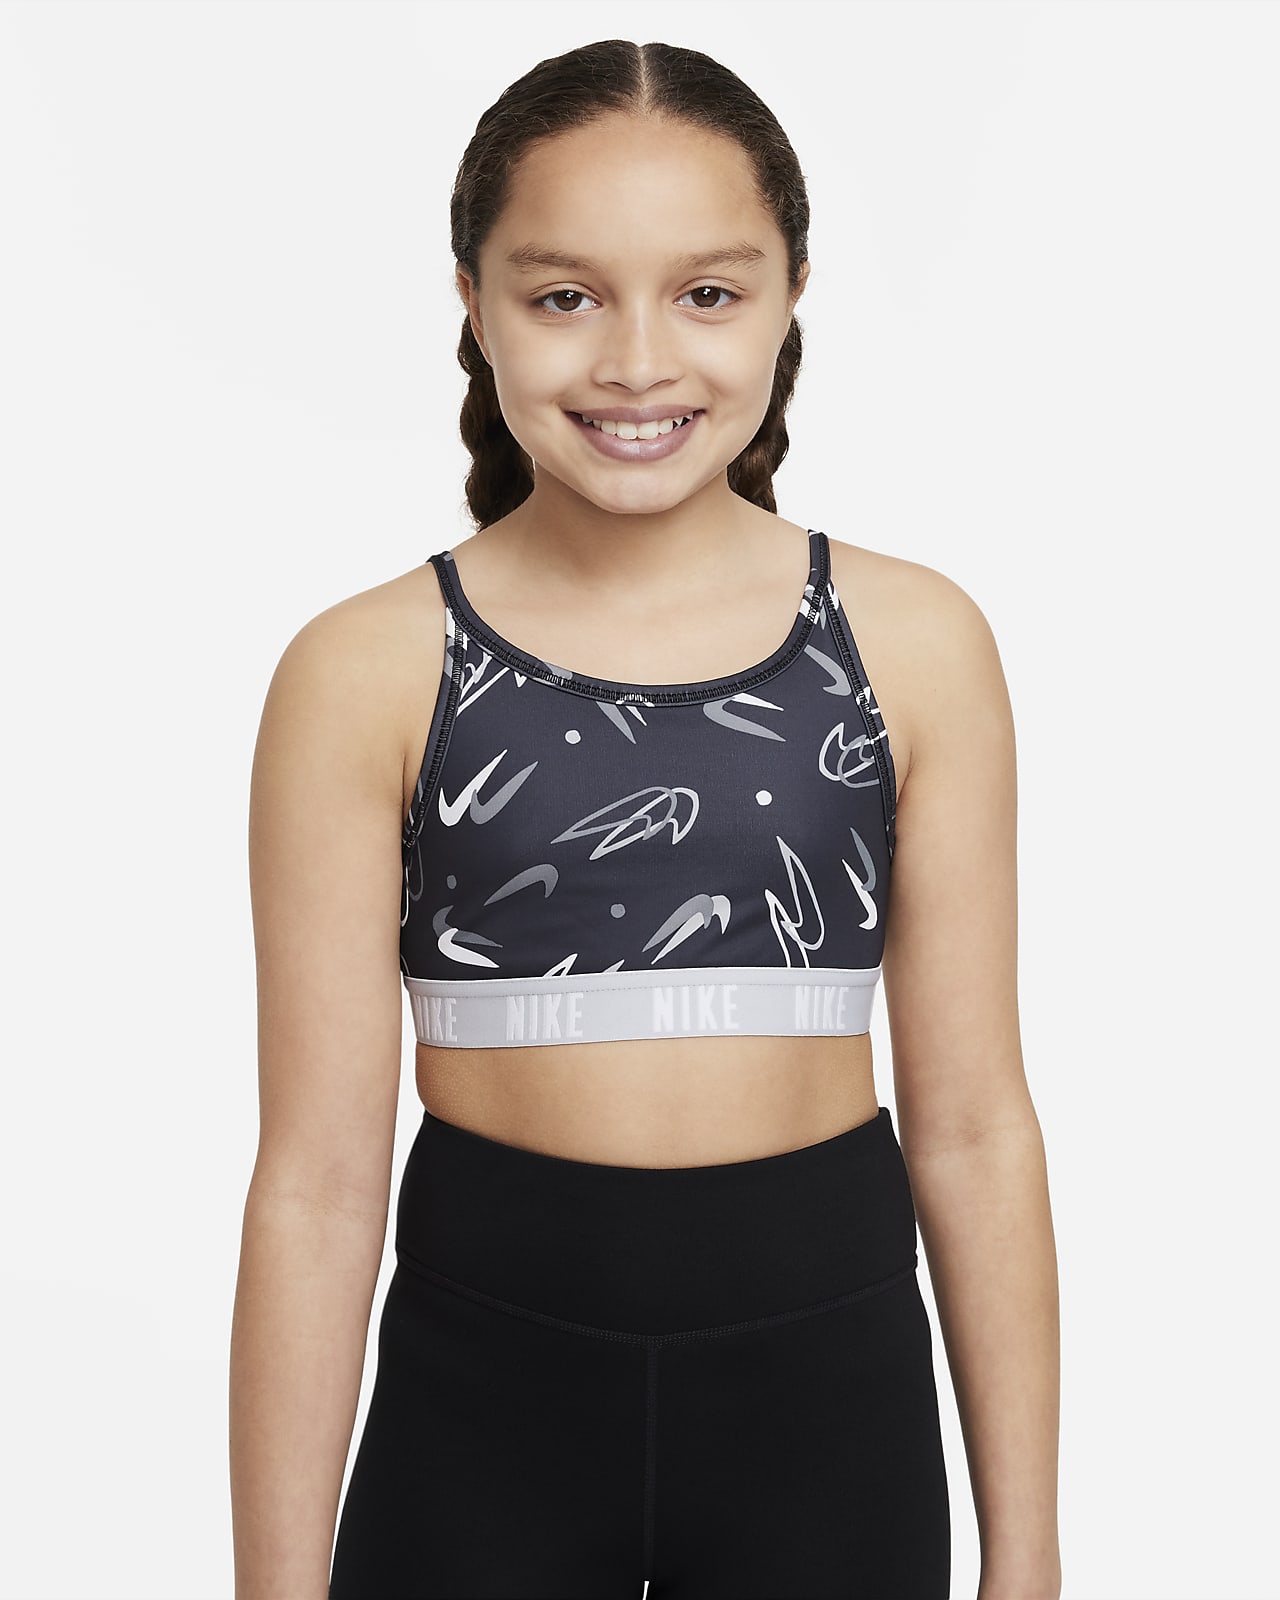 Nike One Big Kids' (girls') Dri-fit Sports Bra In Red